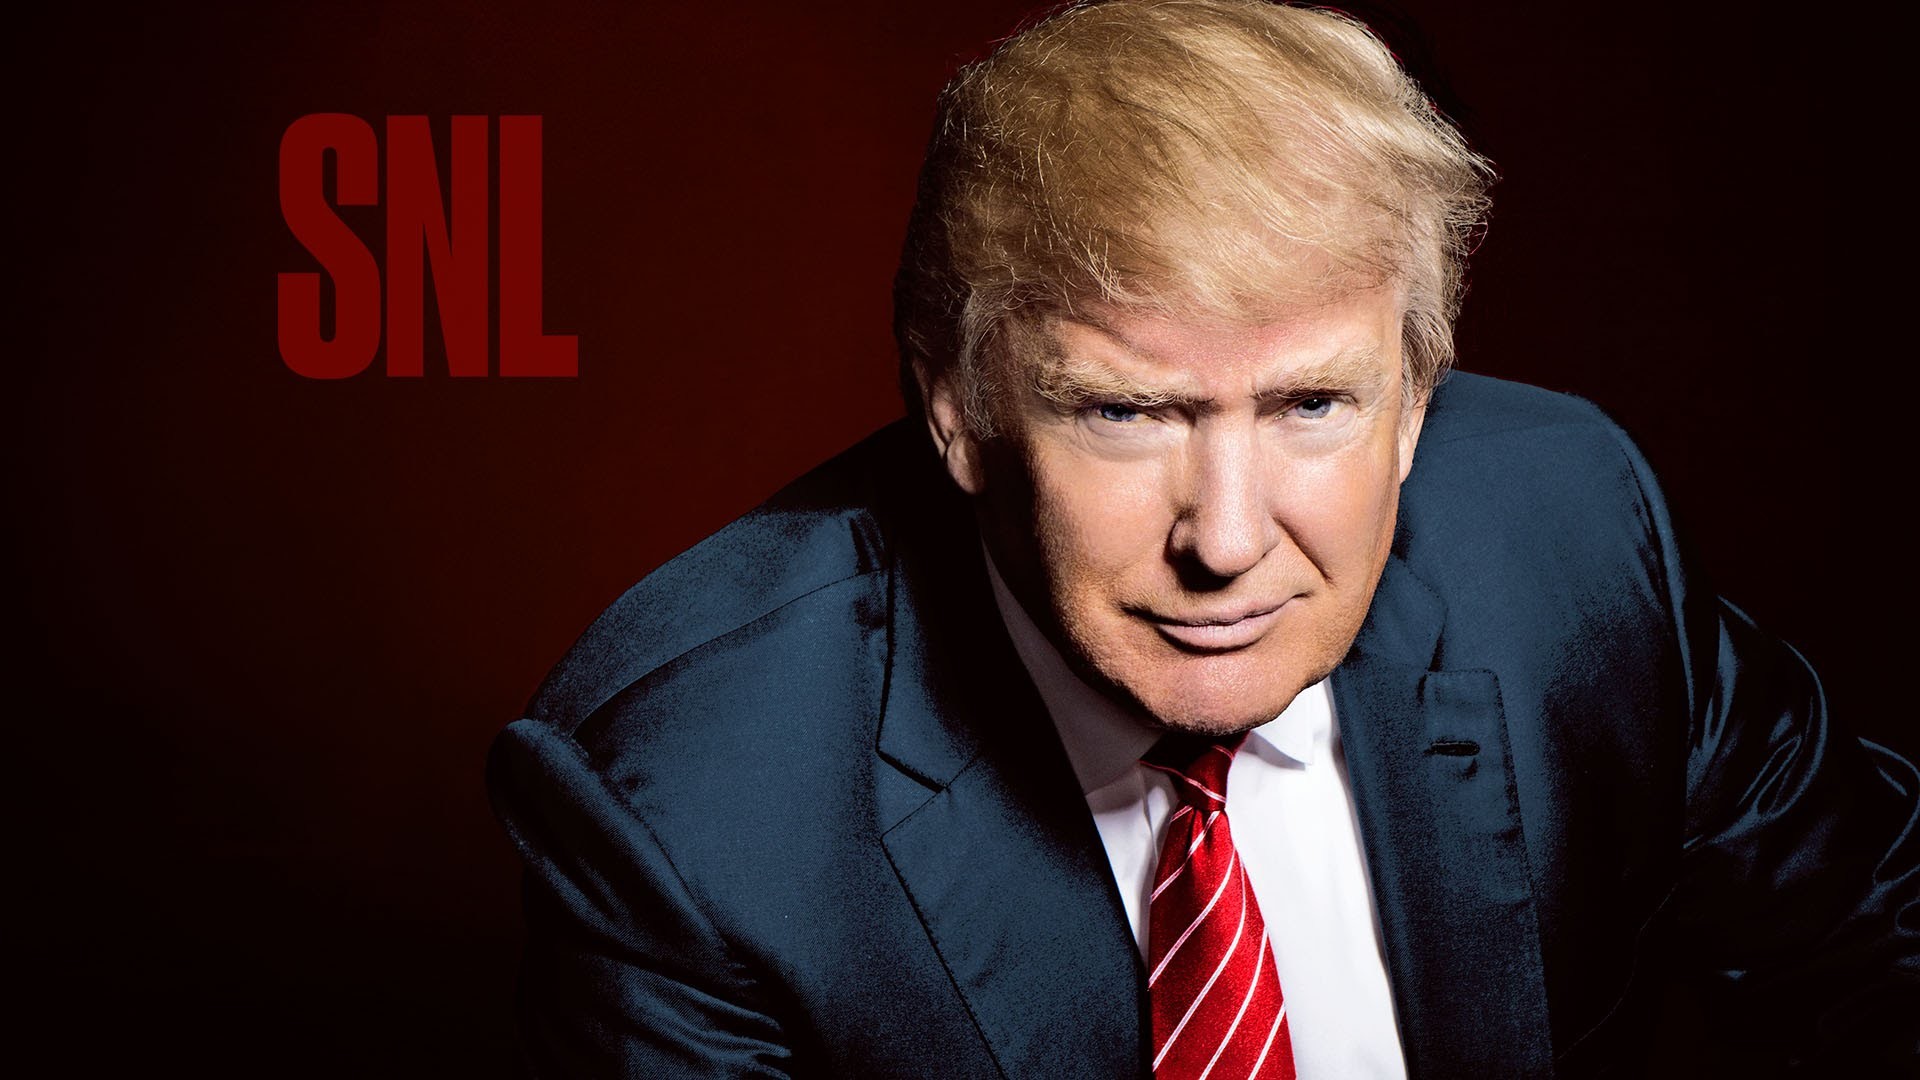 1920x1080 Saturday Night Live - Donald Trump - November 7, 2015